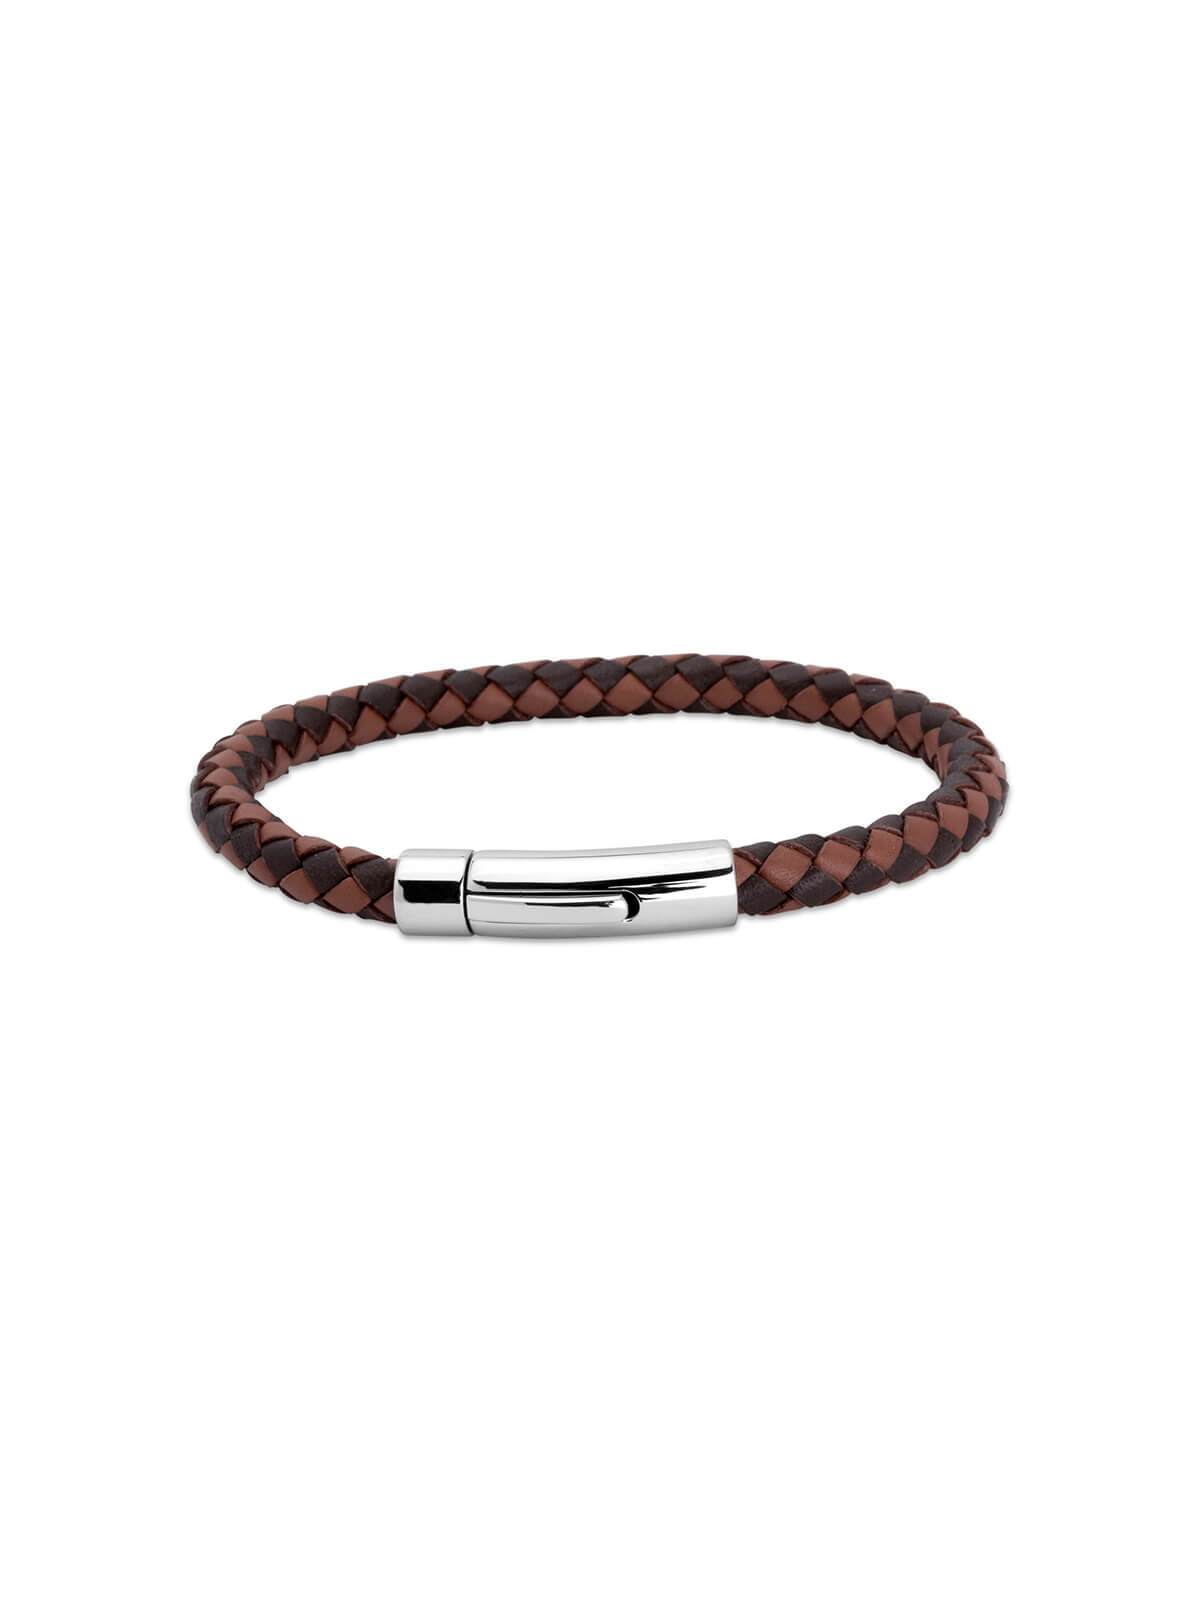 Unique & Co. 21cm Dark and Light Brown Leather Bracelet A40MB/21CM